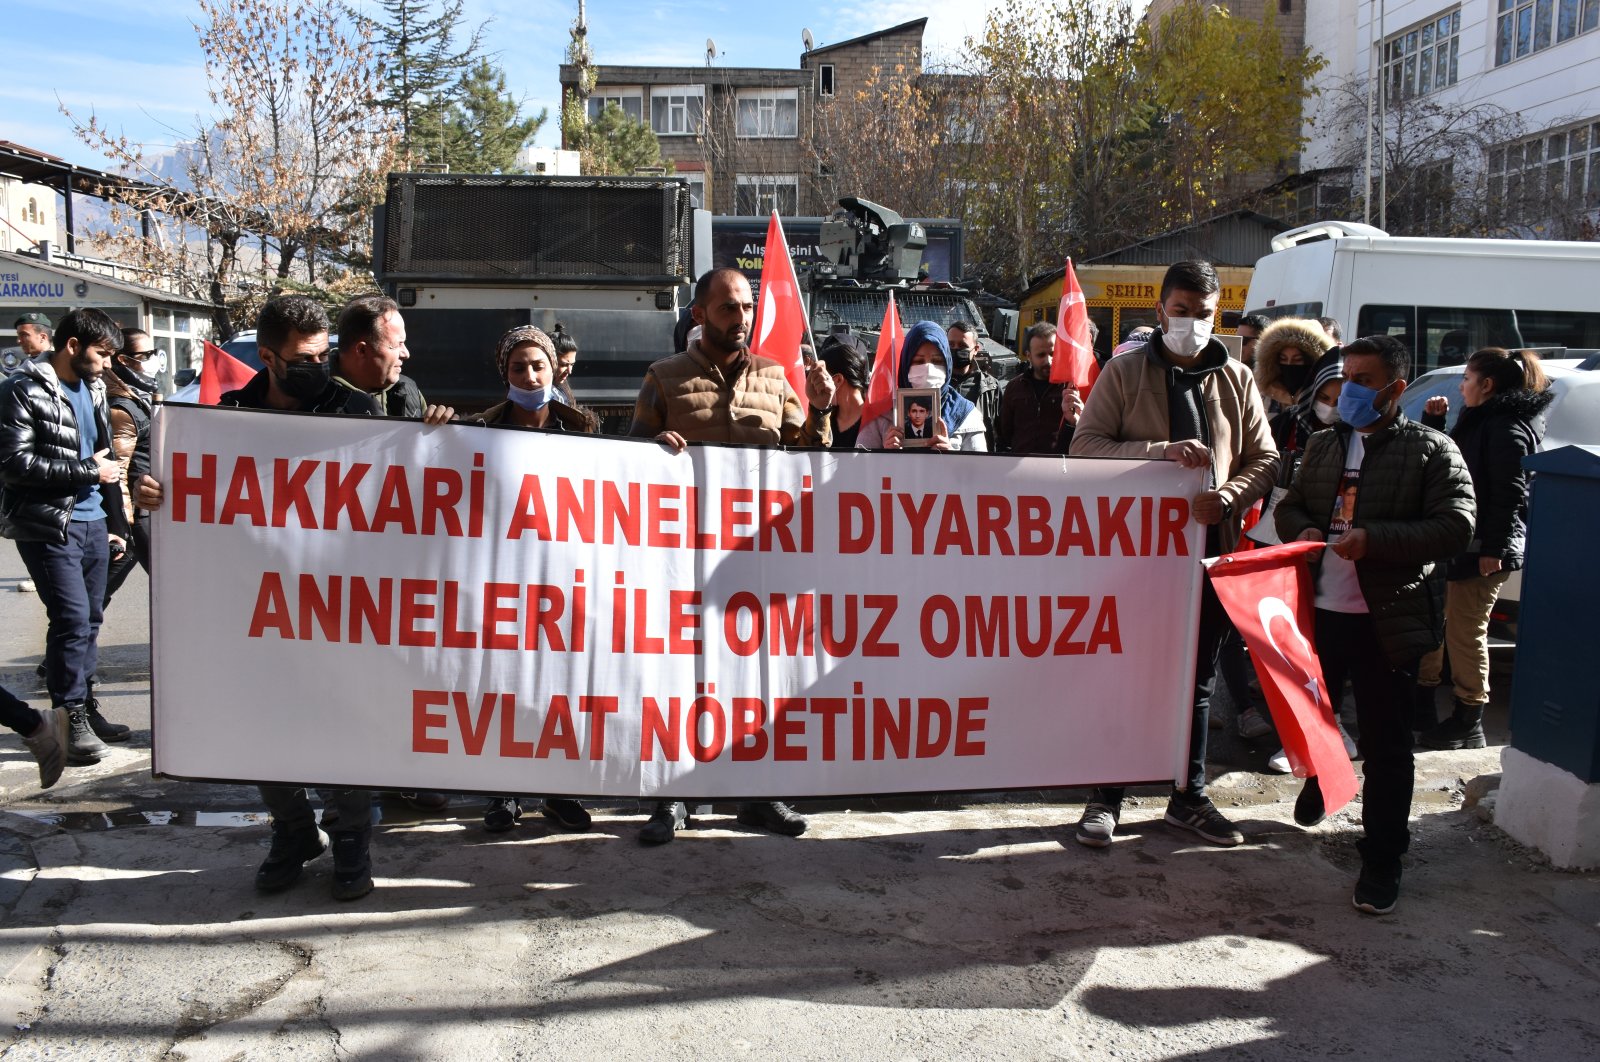 People stage a protest against the PKK terrorist group in Hakkari, southeastern Turkey, Nov. 19, 2021. (AA Photo)